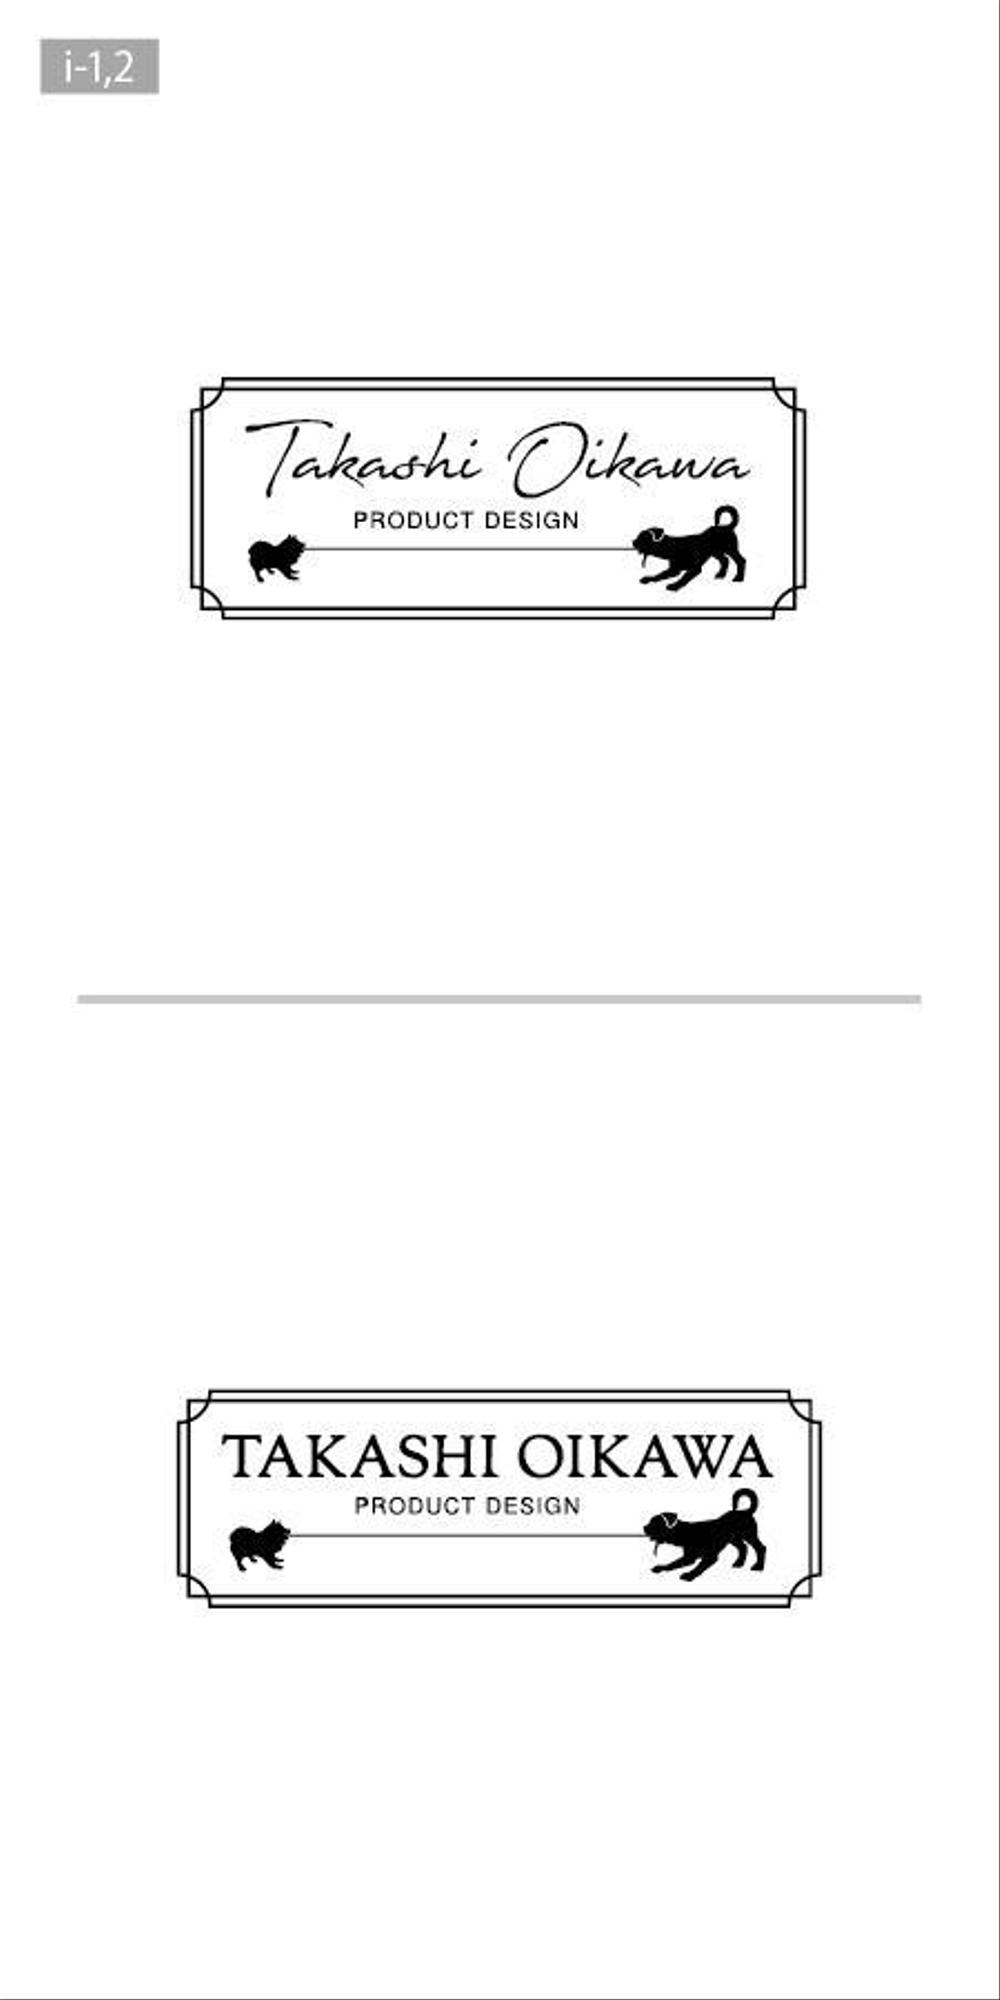 takashioikawaproductdesign_i12.jpg